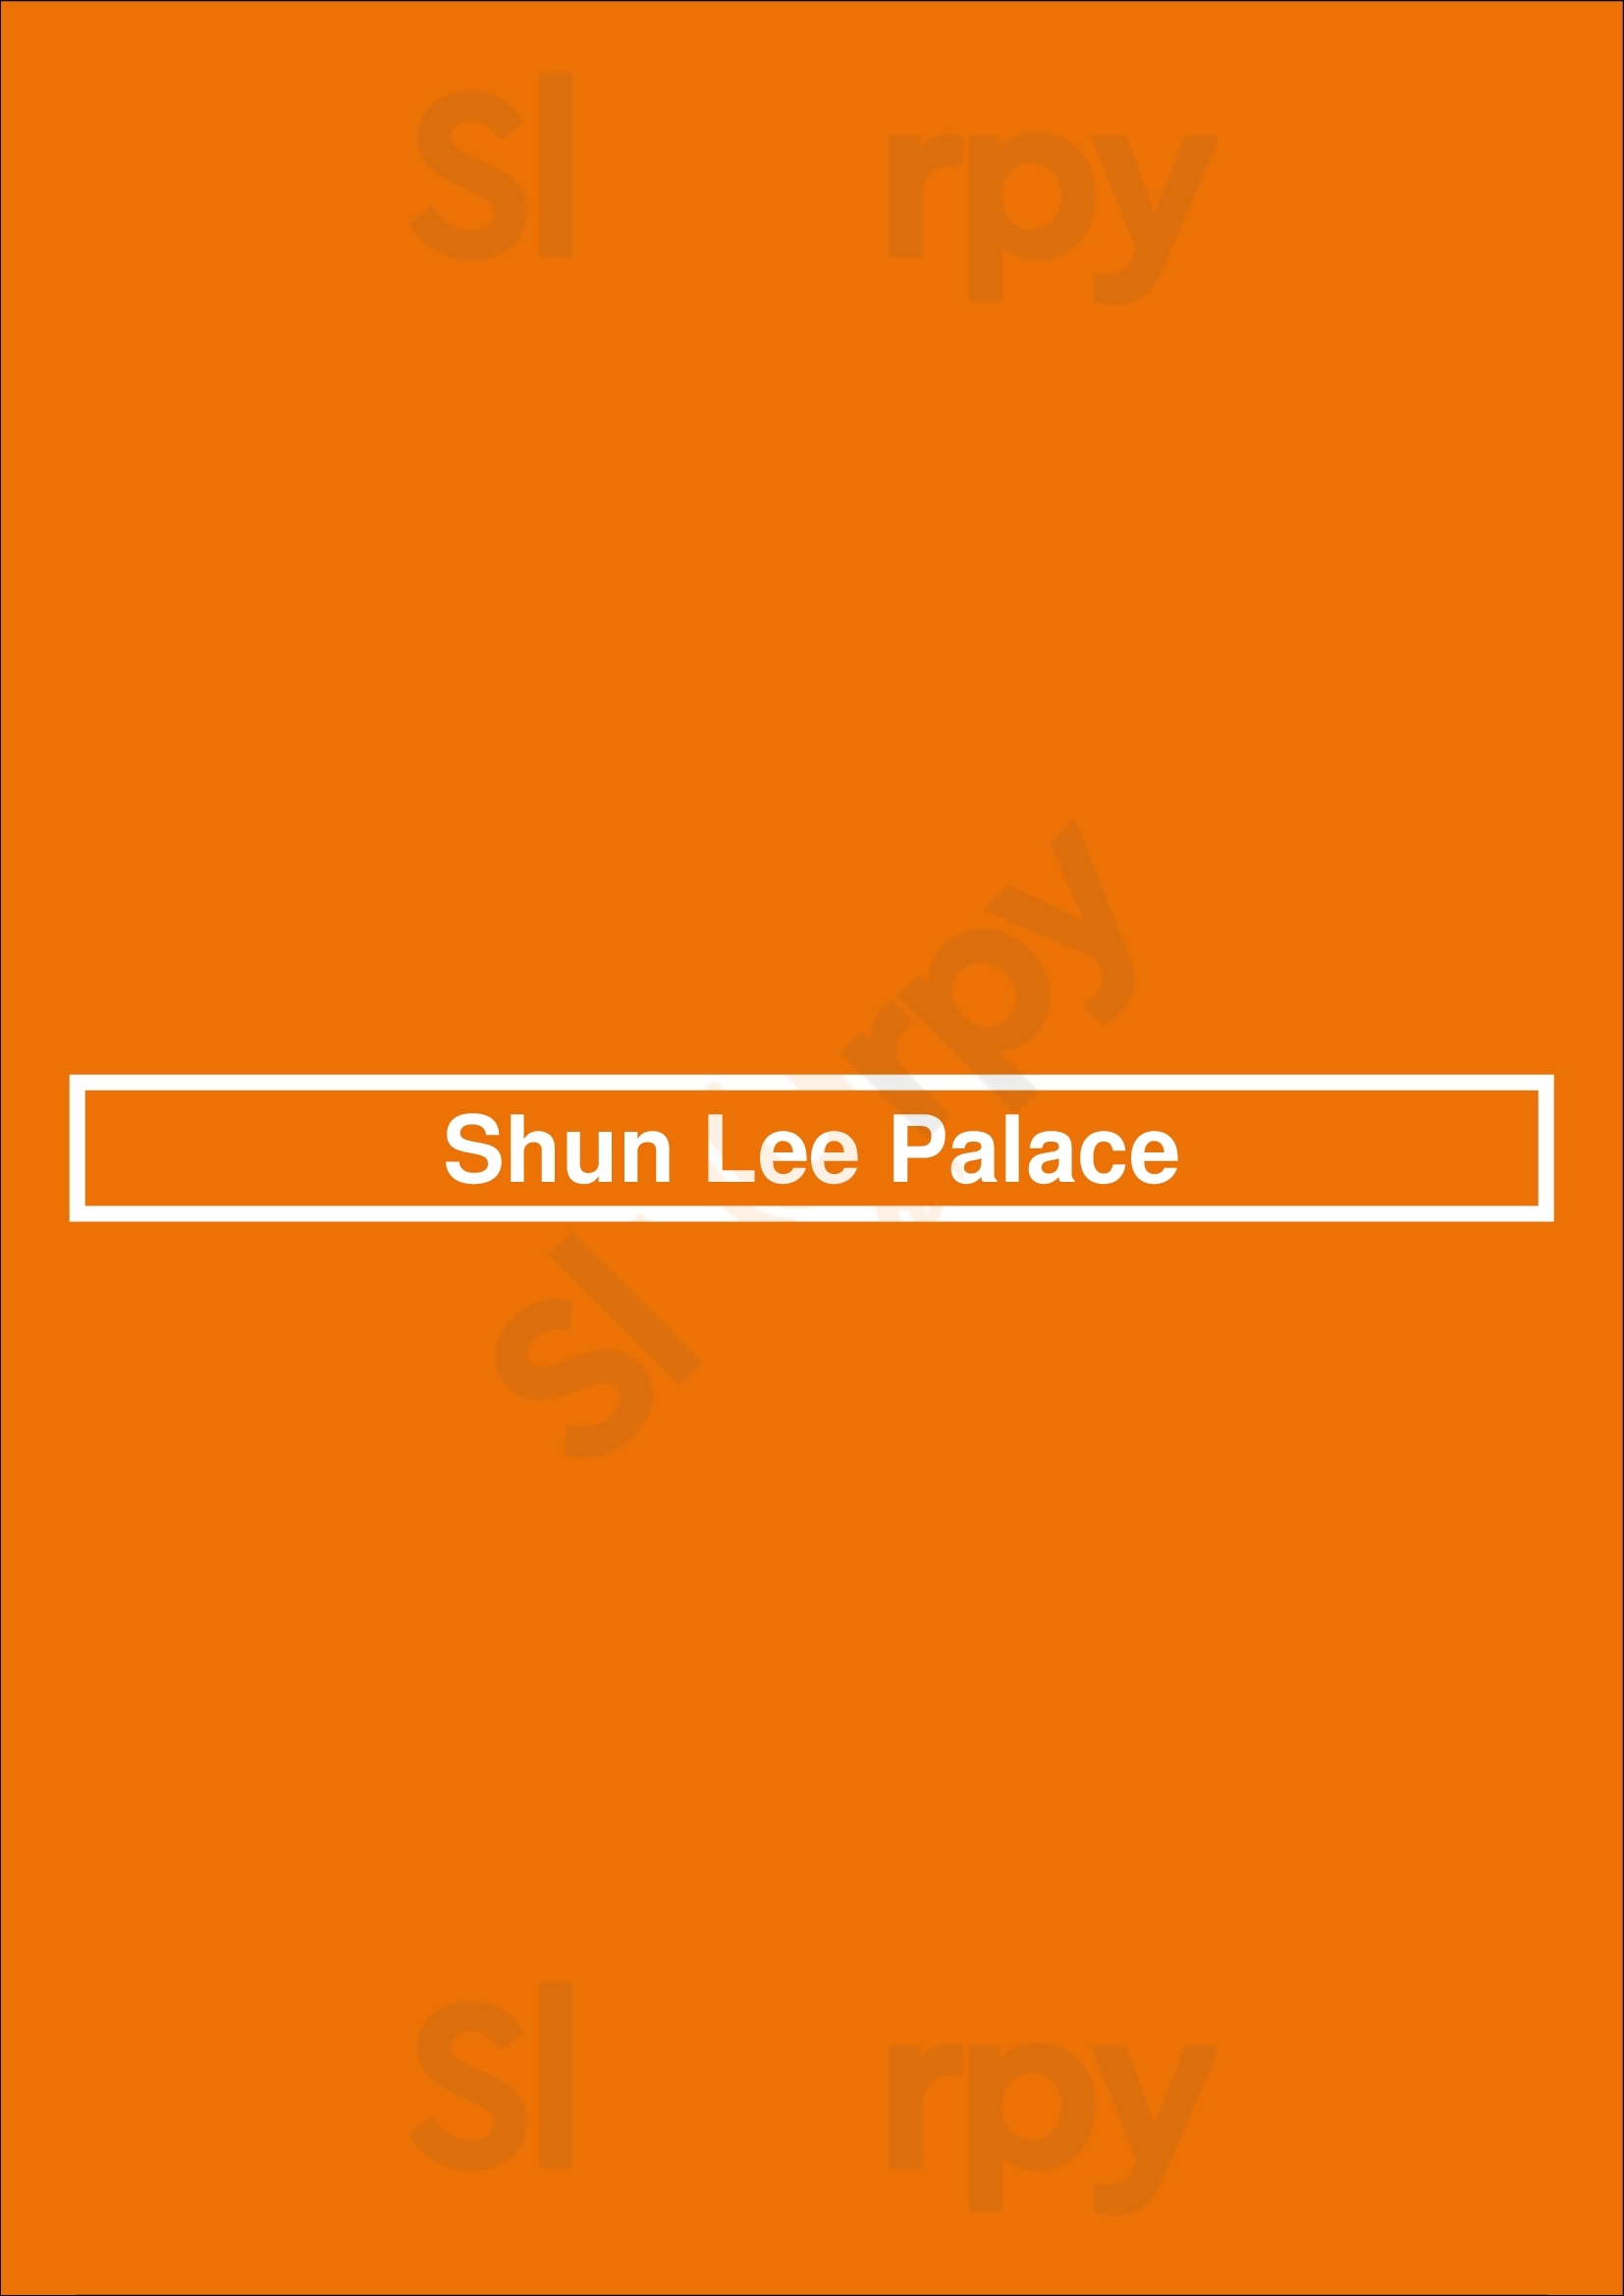 Shun Lee Palace Charlotte Menu - 1